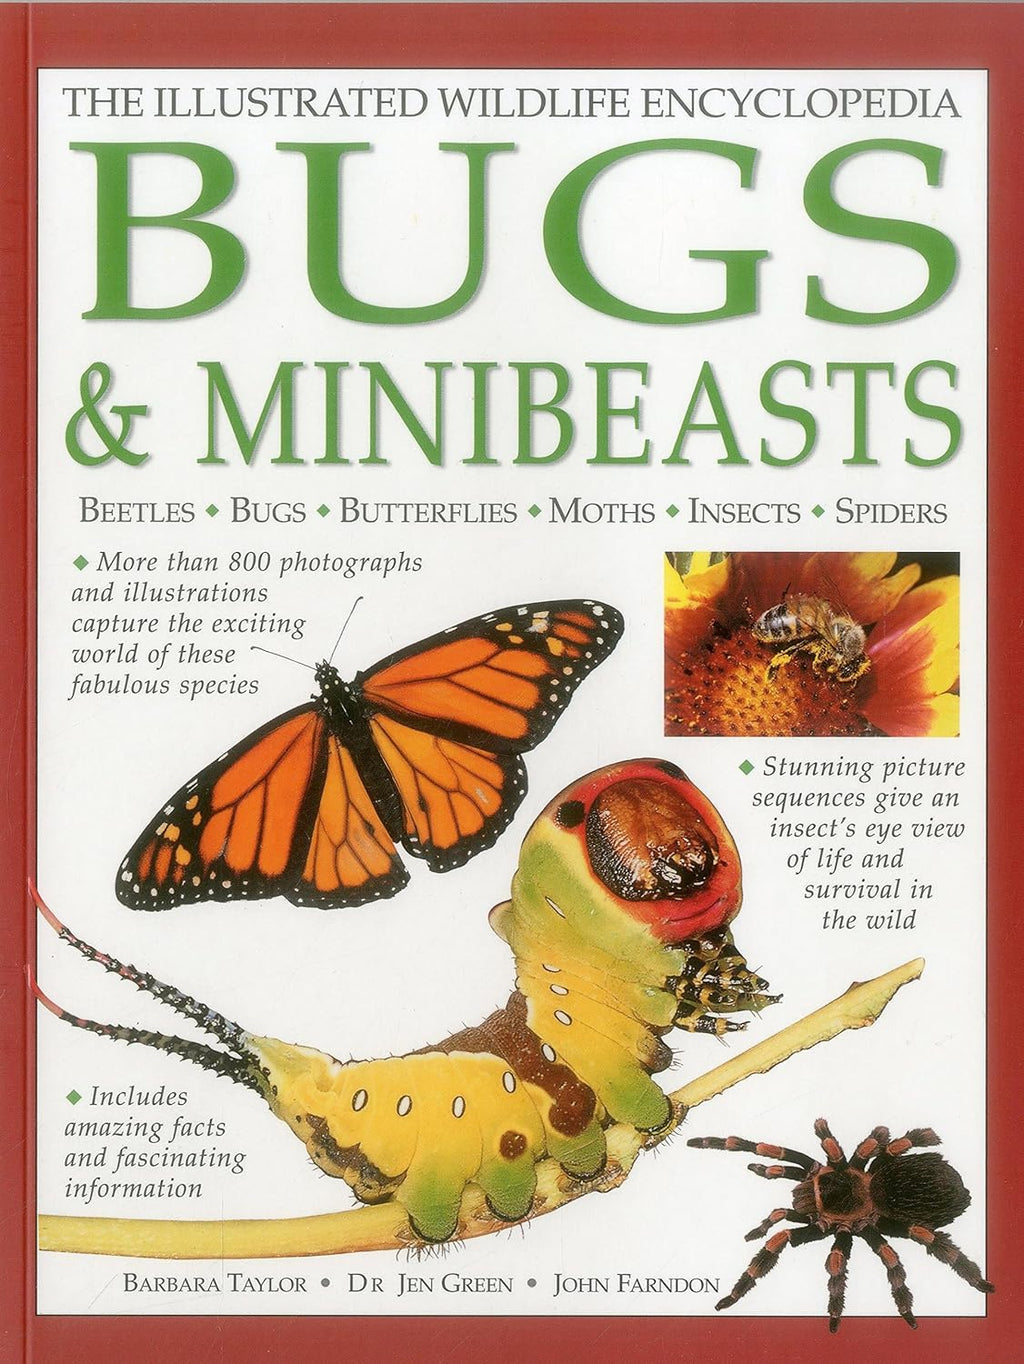 The Illustrated Wildlife Encyclopedia: Bugs & Minibeasts